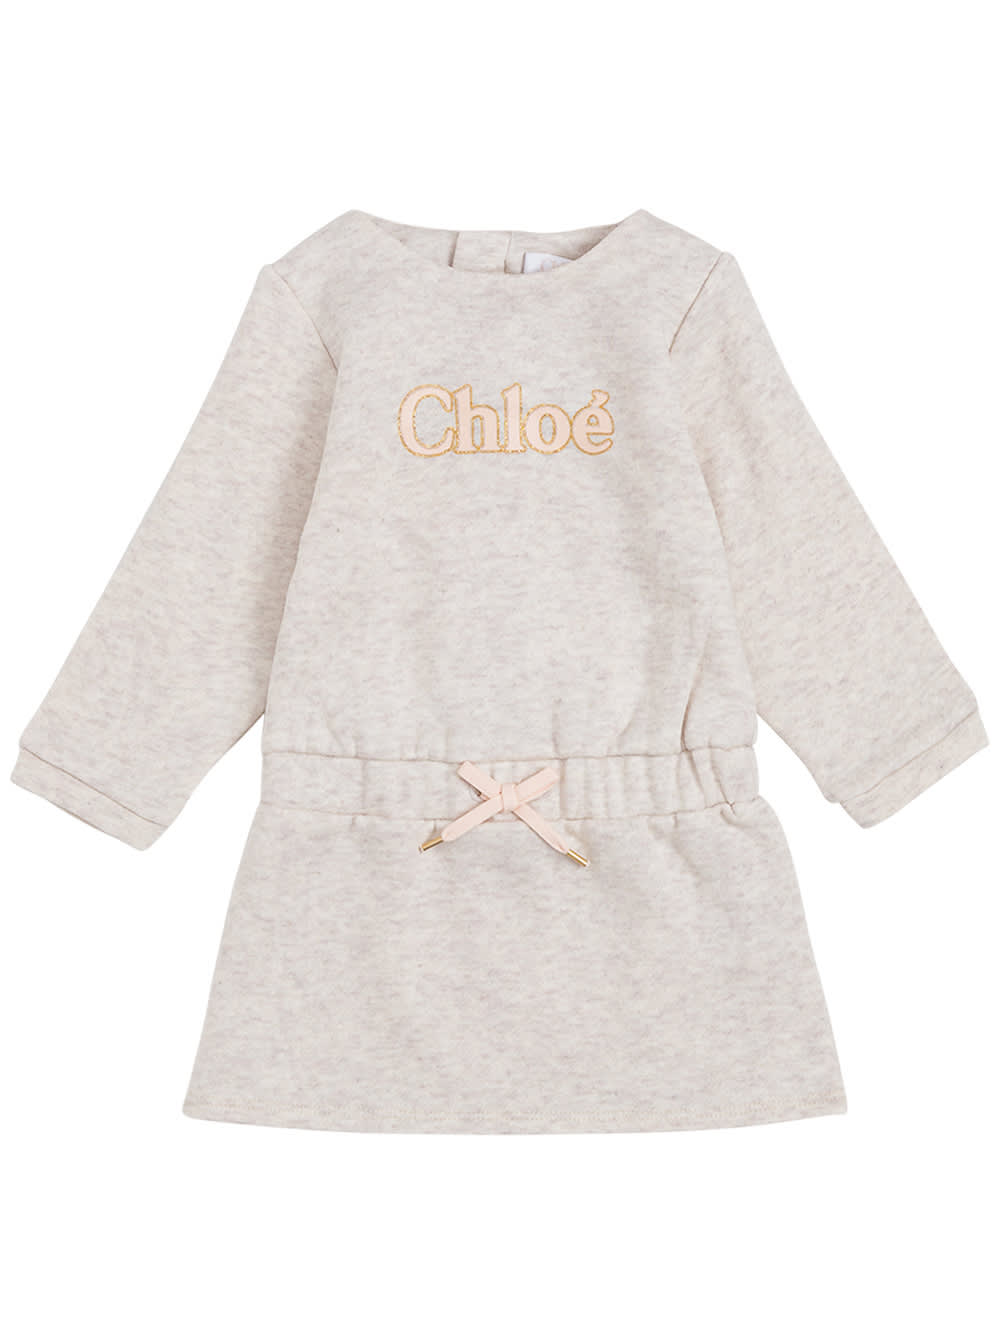 Chloé Grey Cotton Dress With Logo